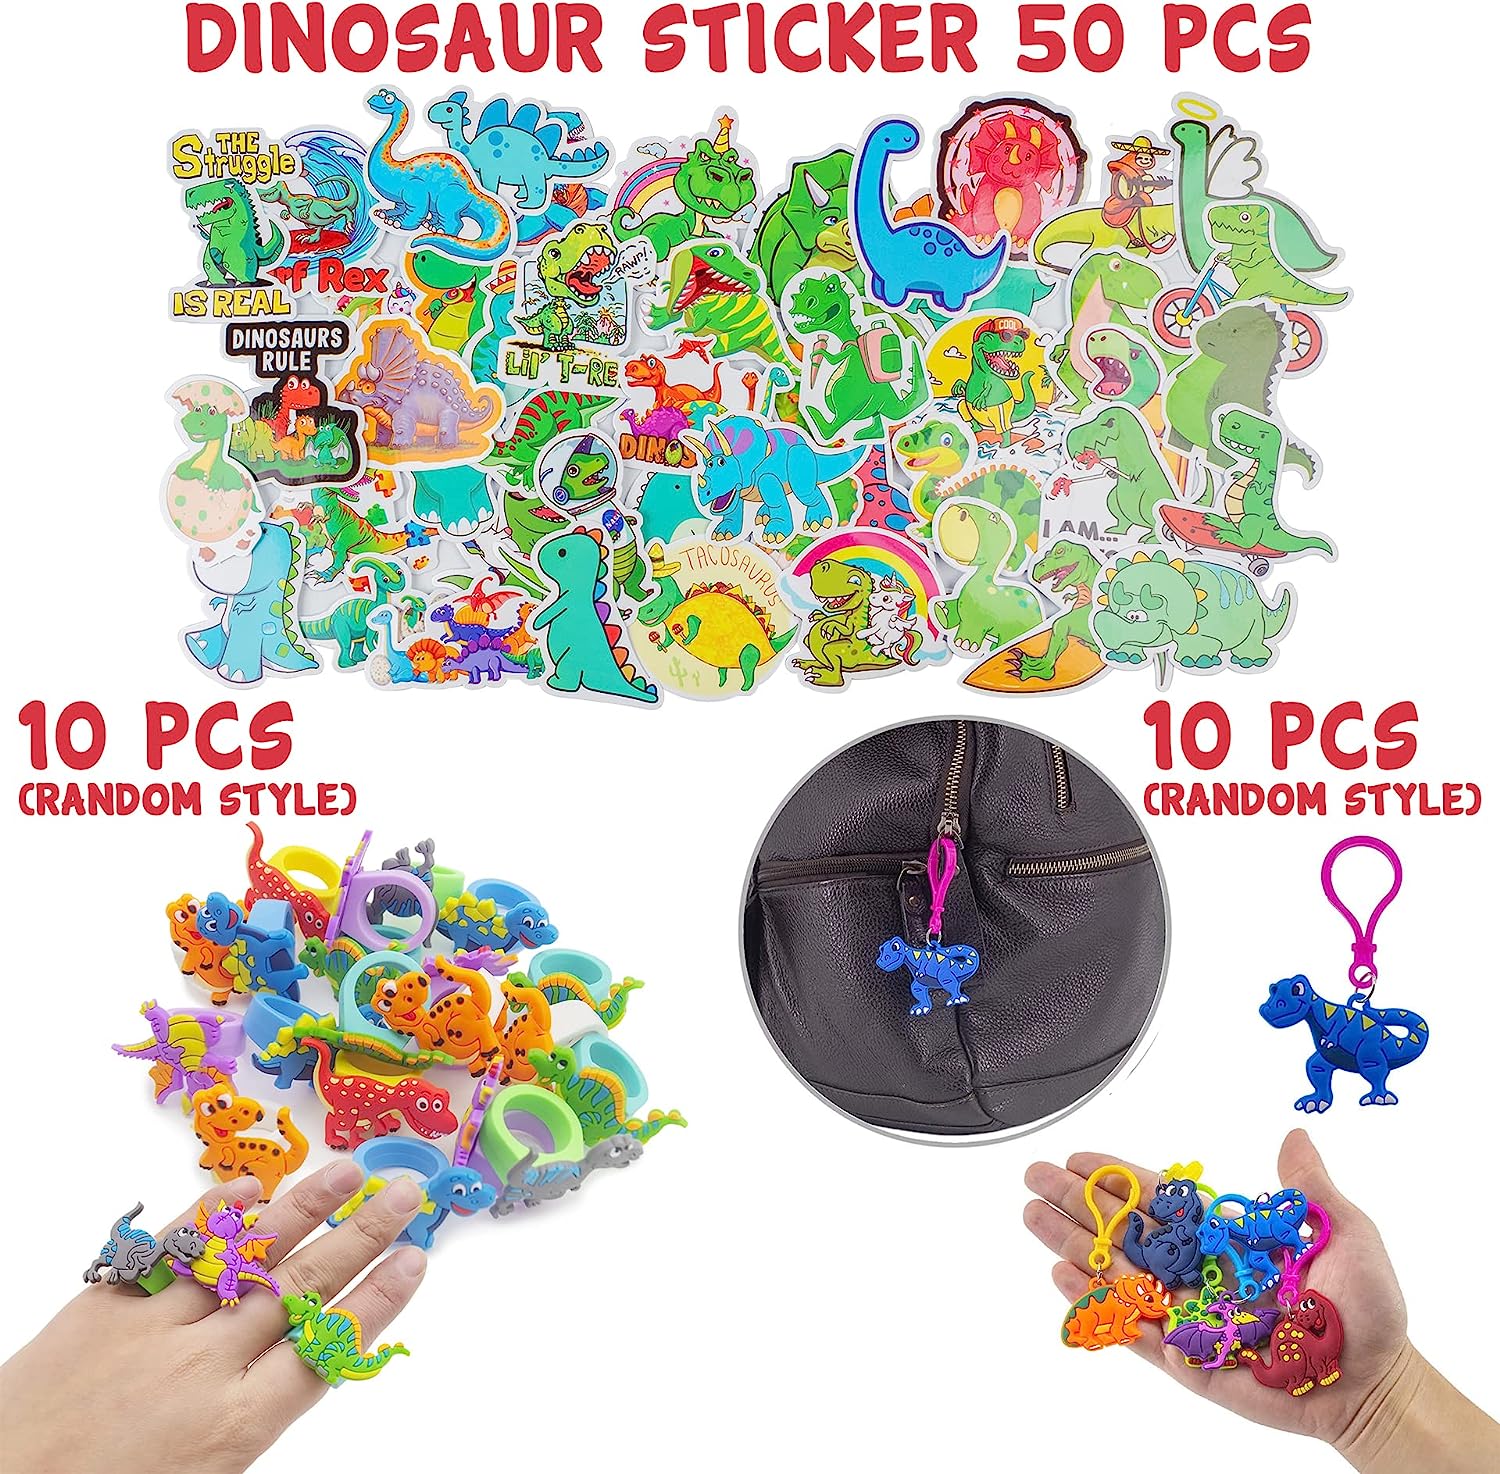 Crafts Kit for Kids Ages 6-8, Night Light for Kids, Dinosaur Toys